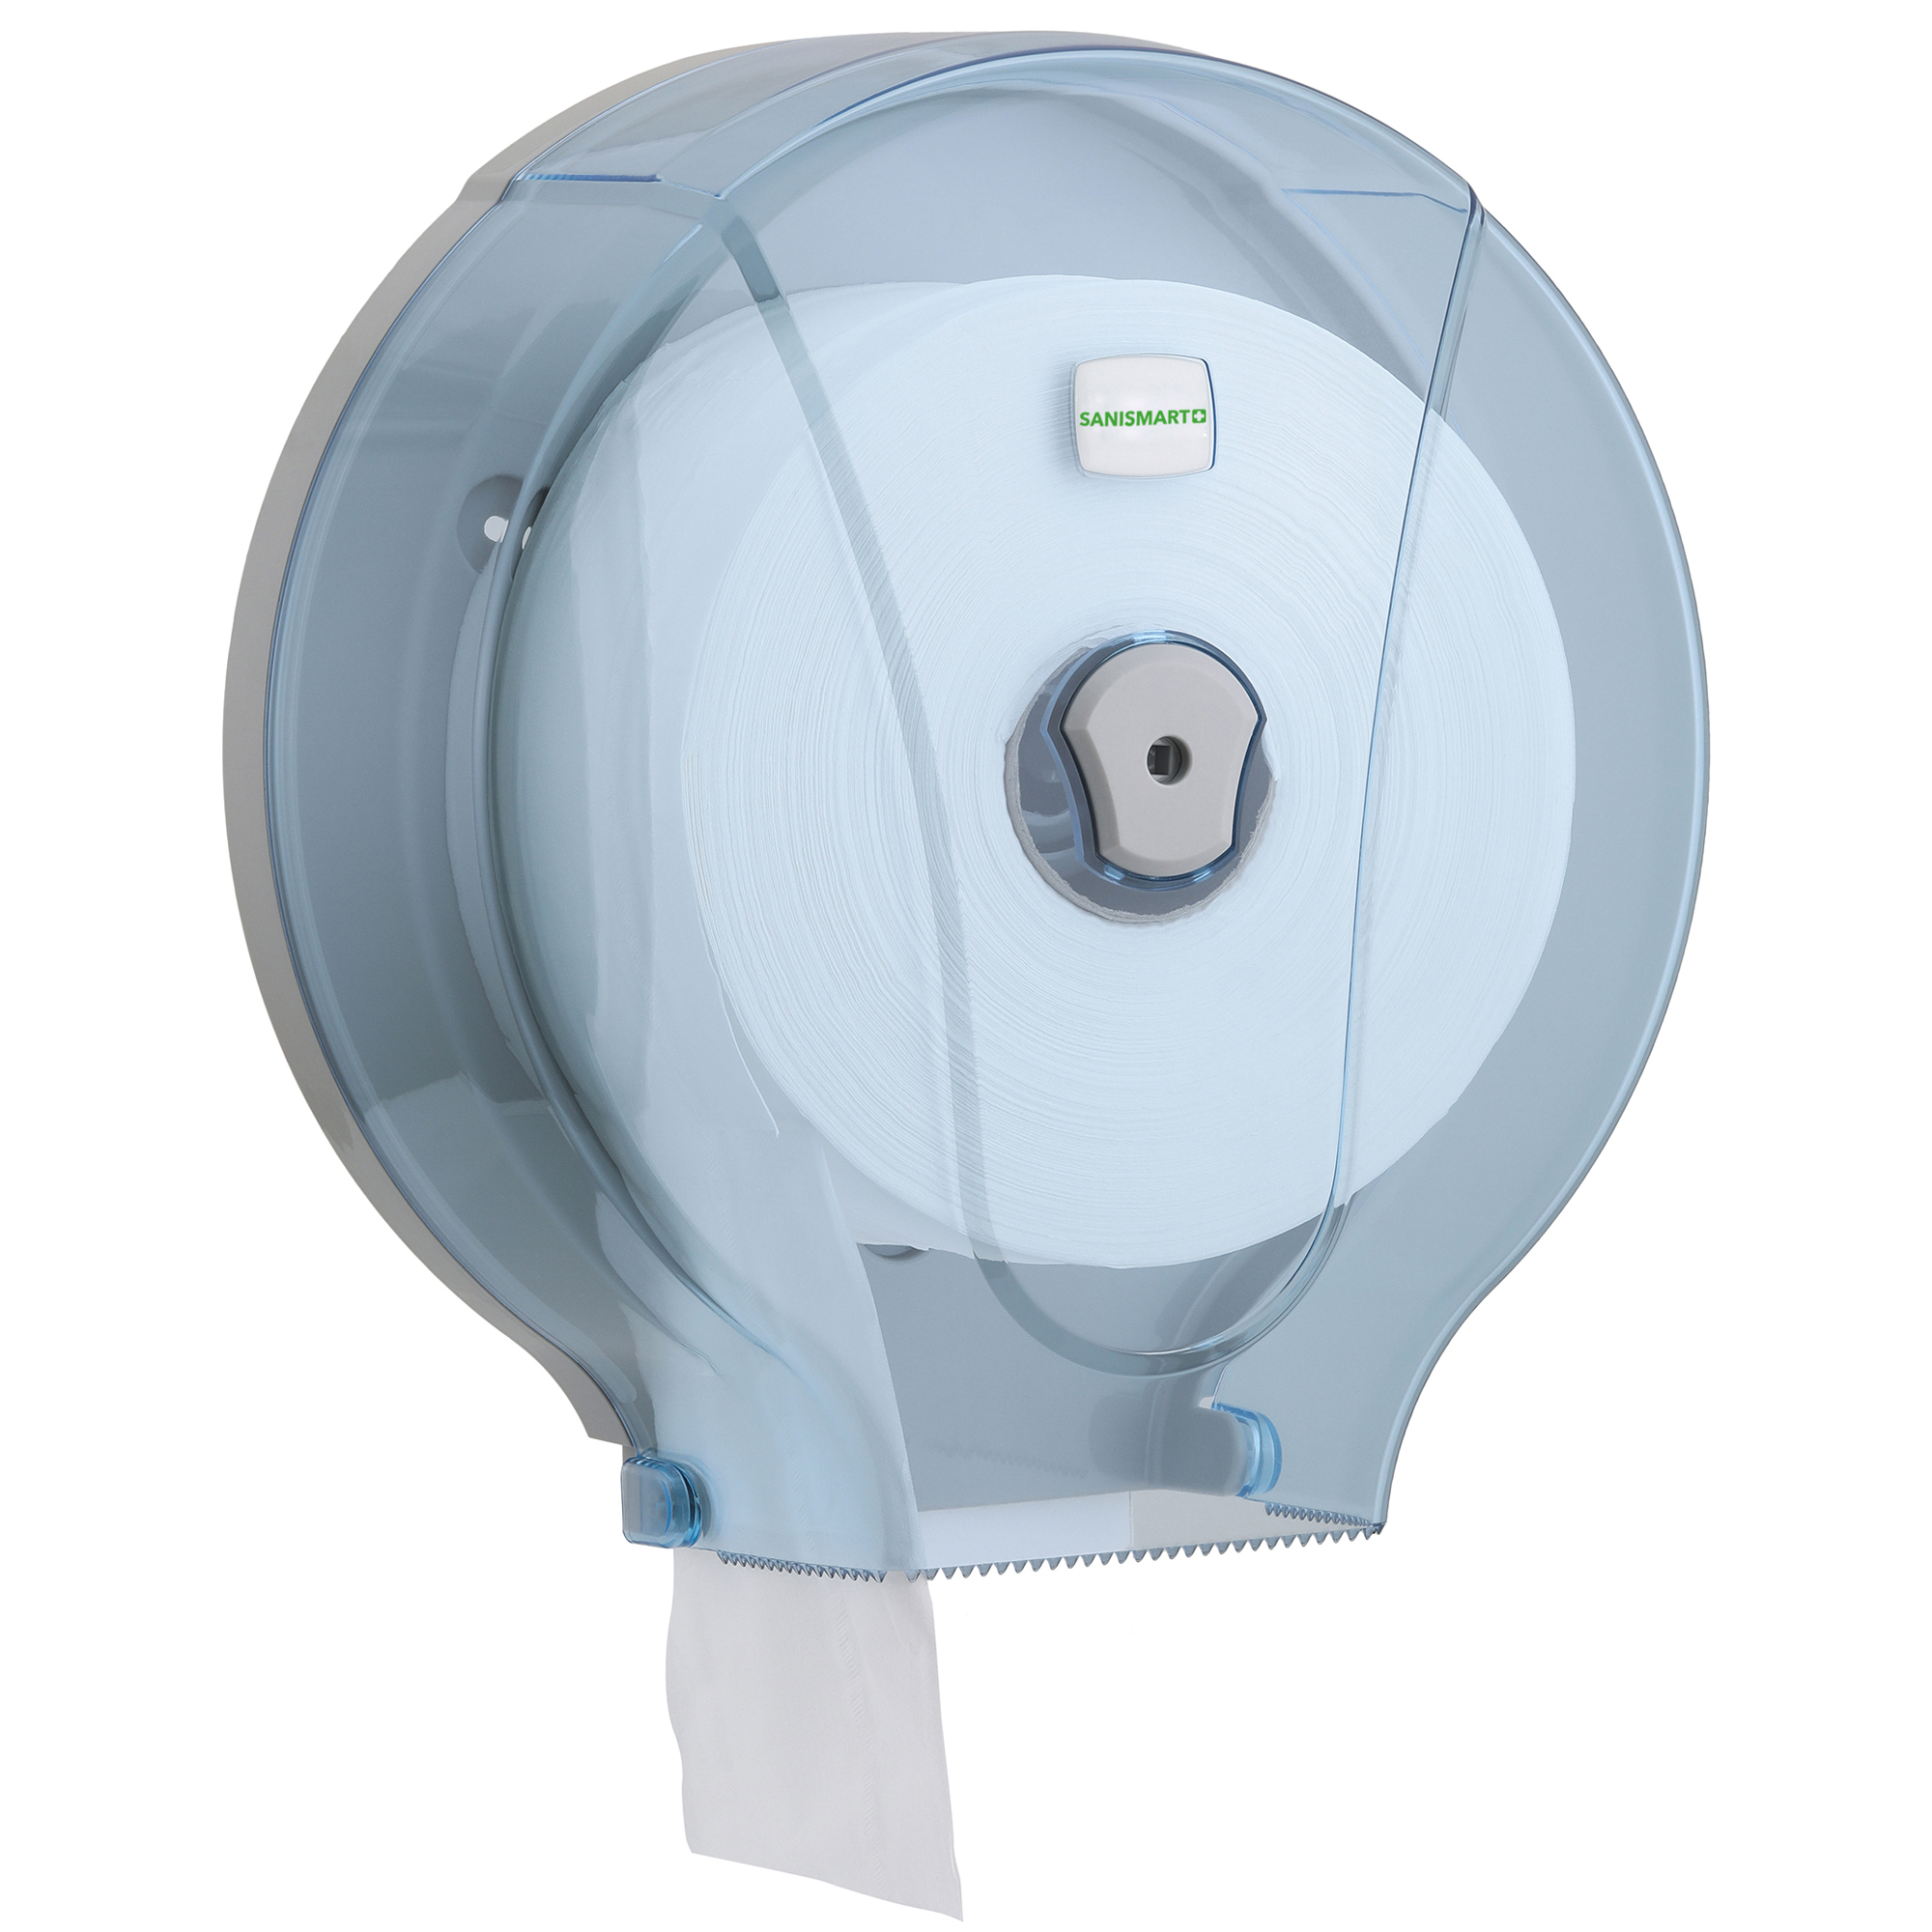 SANISMART Maxi Jumbo Toilettenpapierspender Kunststoff